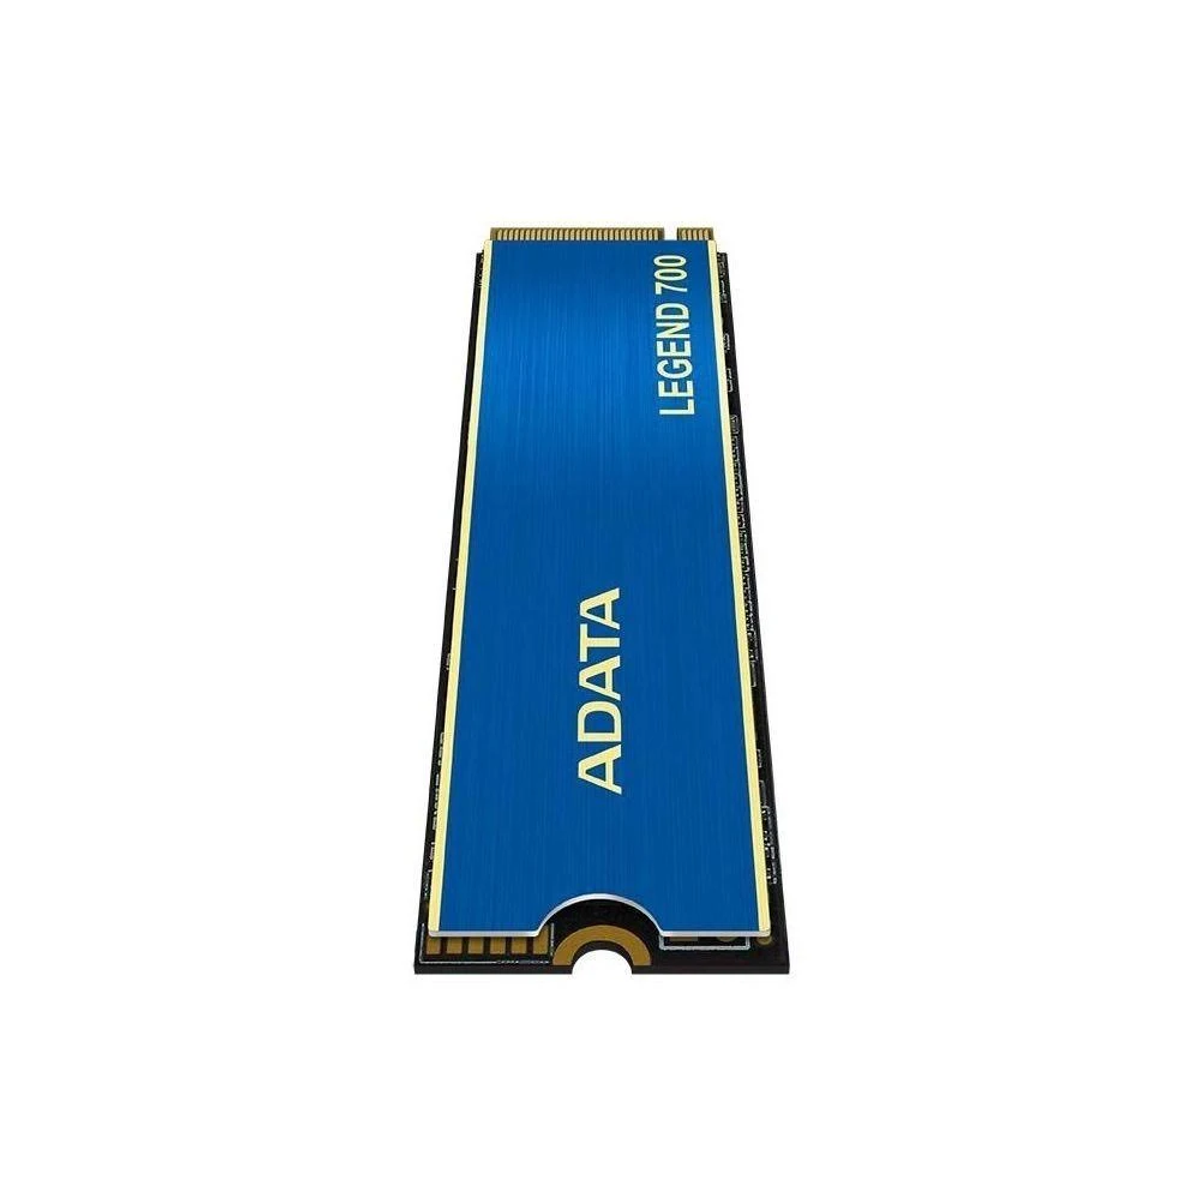 ADATA intern SSD, GB, 512 ALEG-700-512GCS,